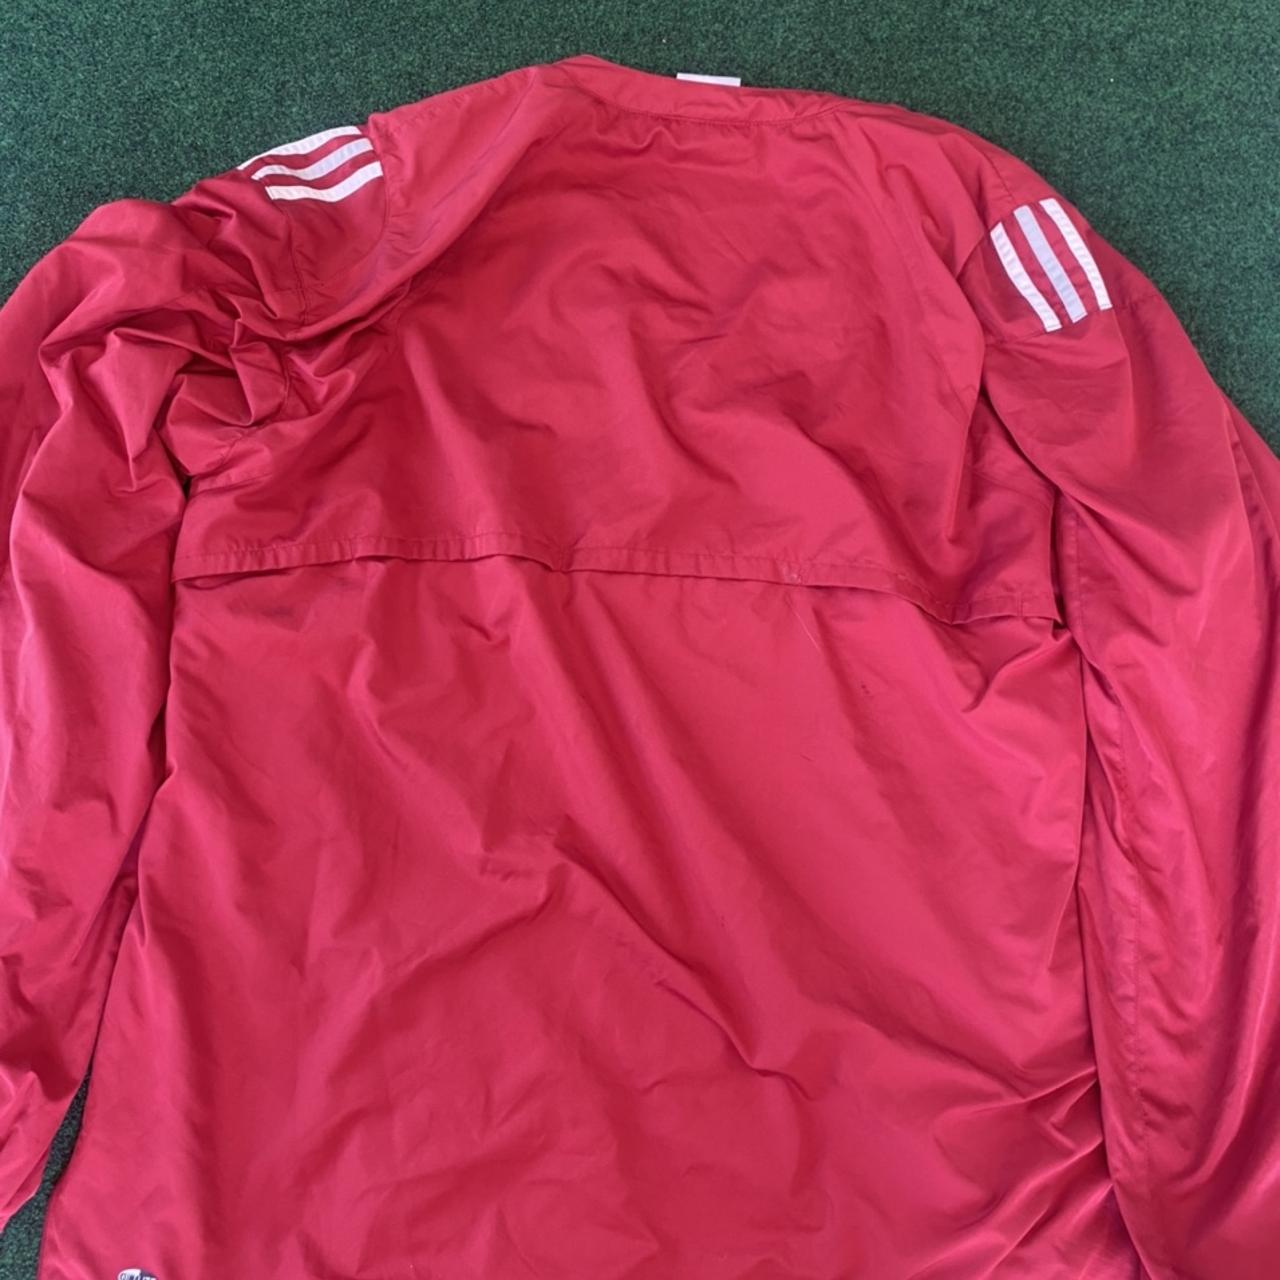 Adidas Men's Red Sweatshirt (4)